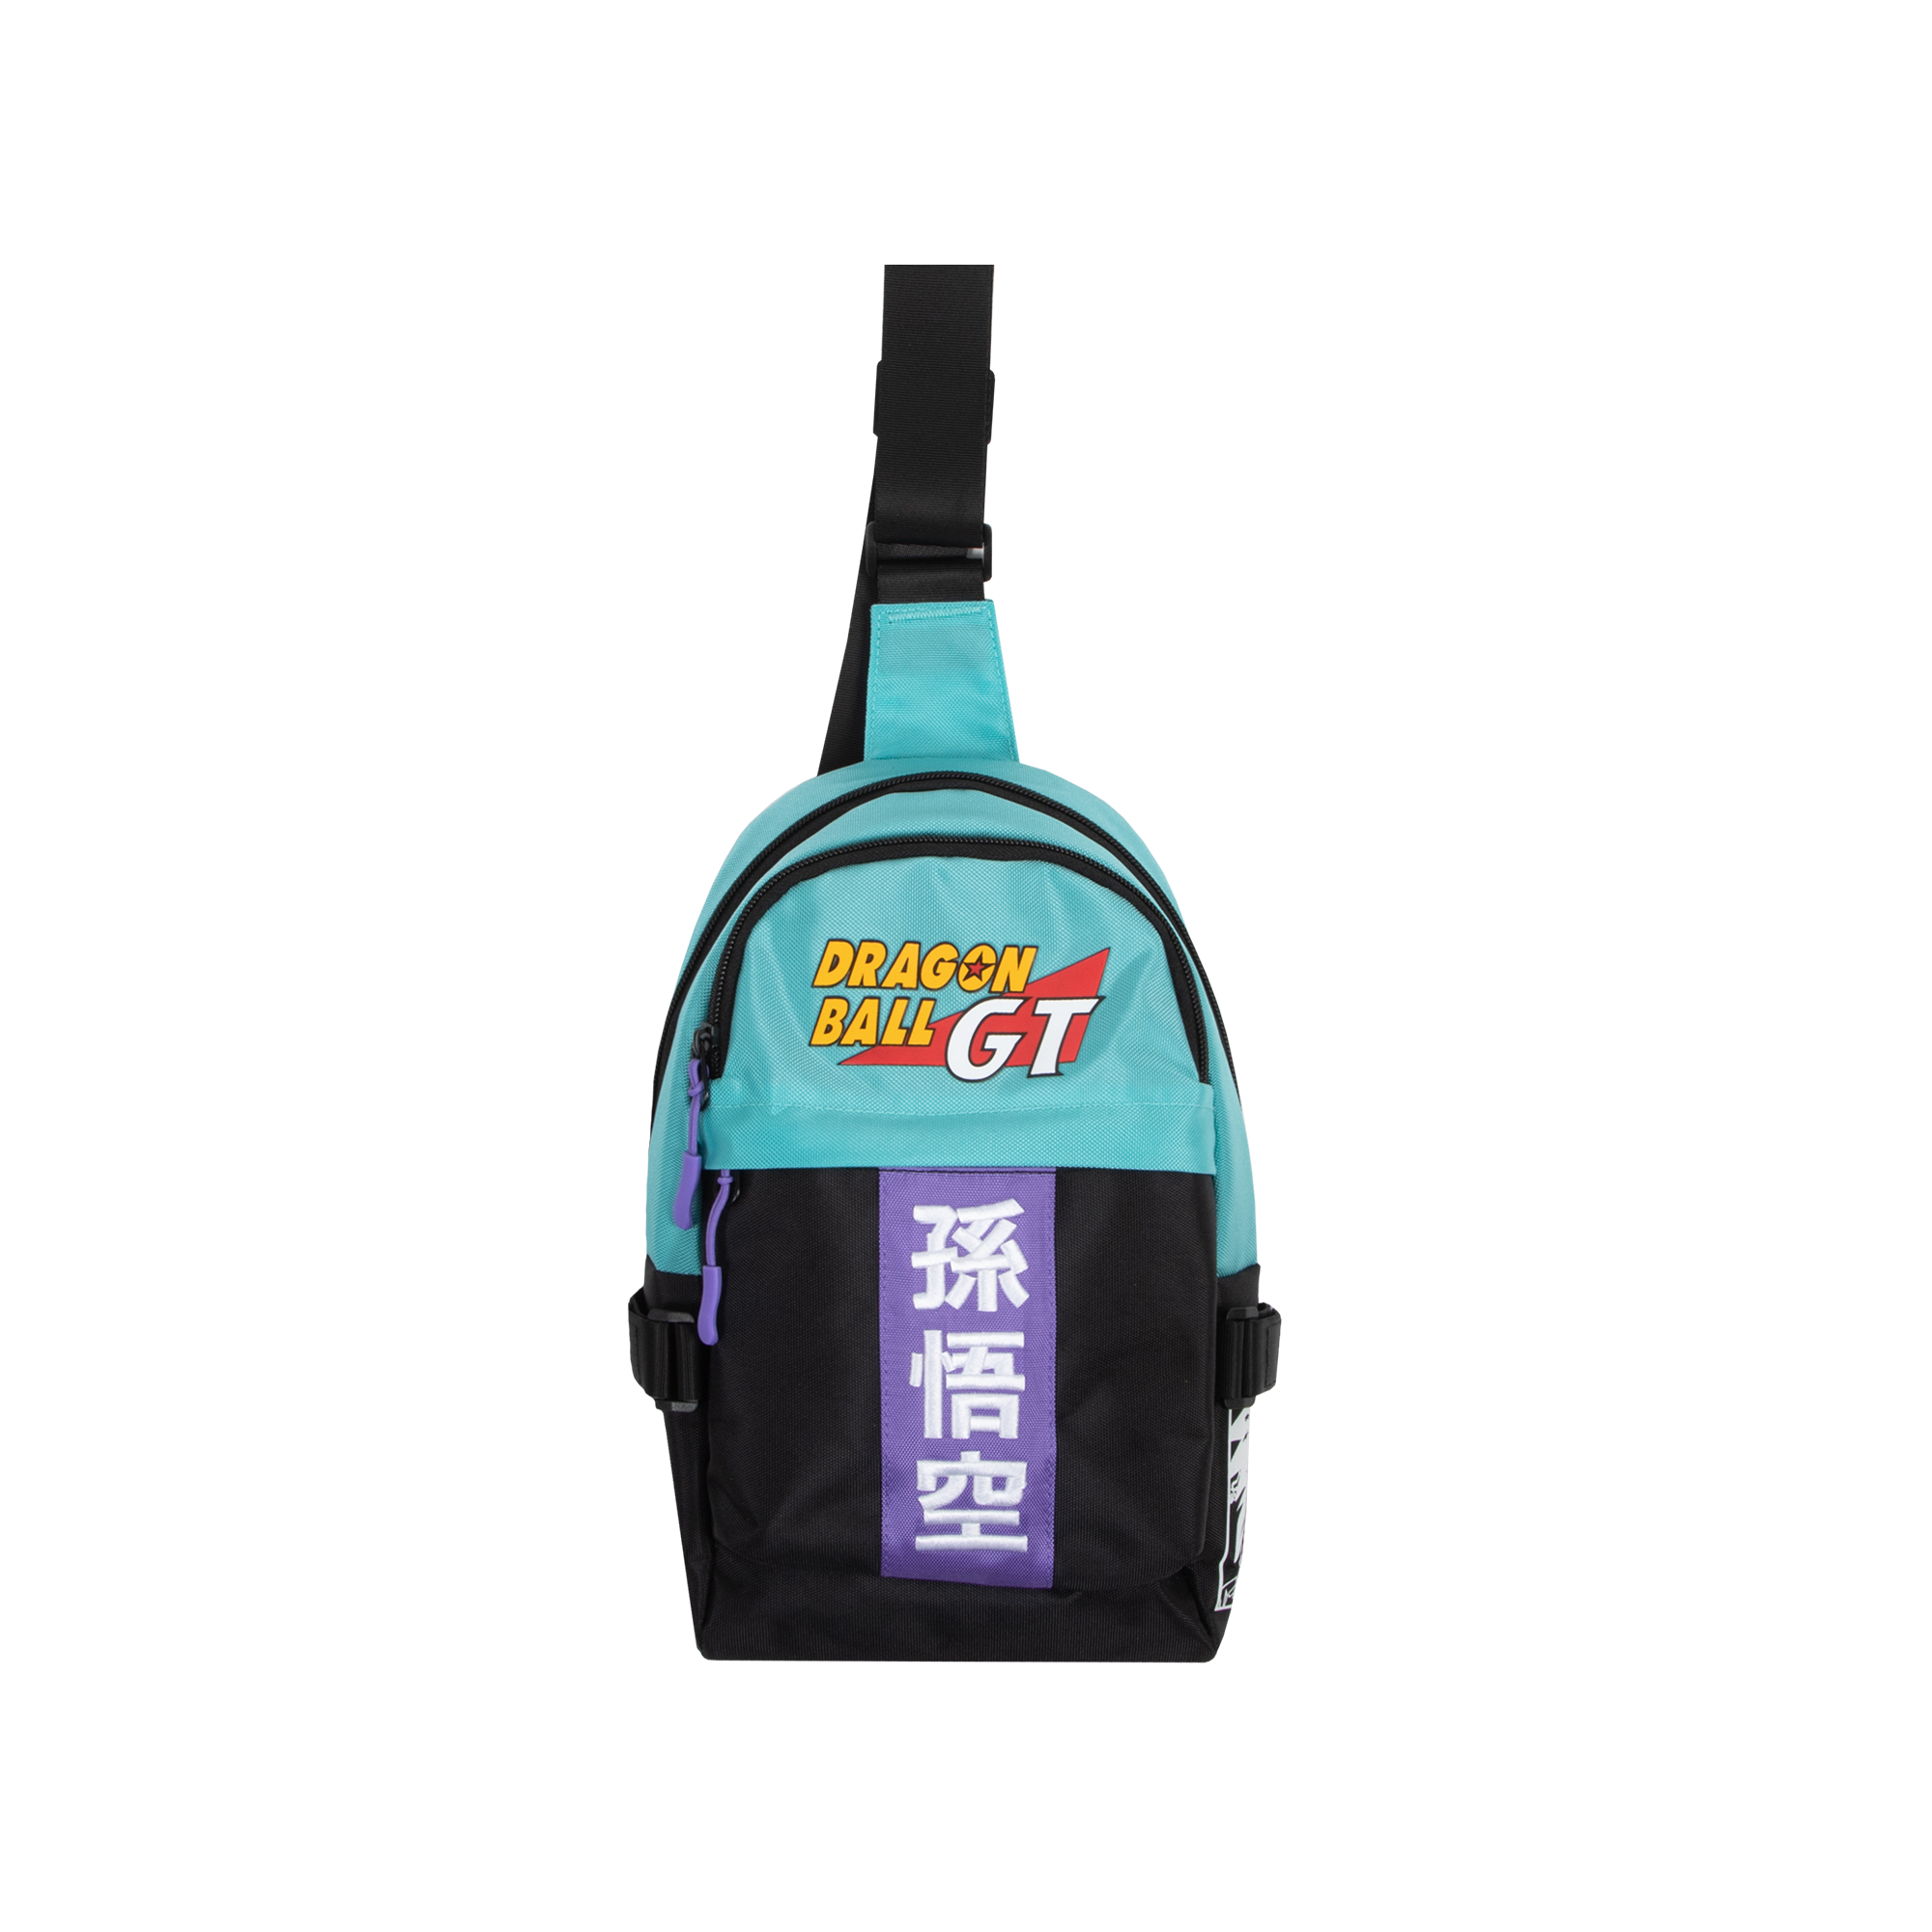 Dragon Ball Z Gogeta Deep Blue Backpack - Dragon Ball Z Merch